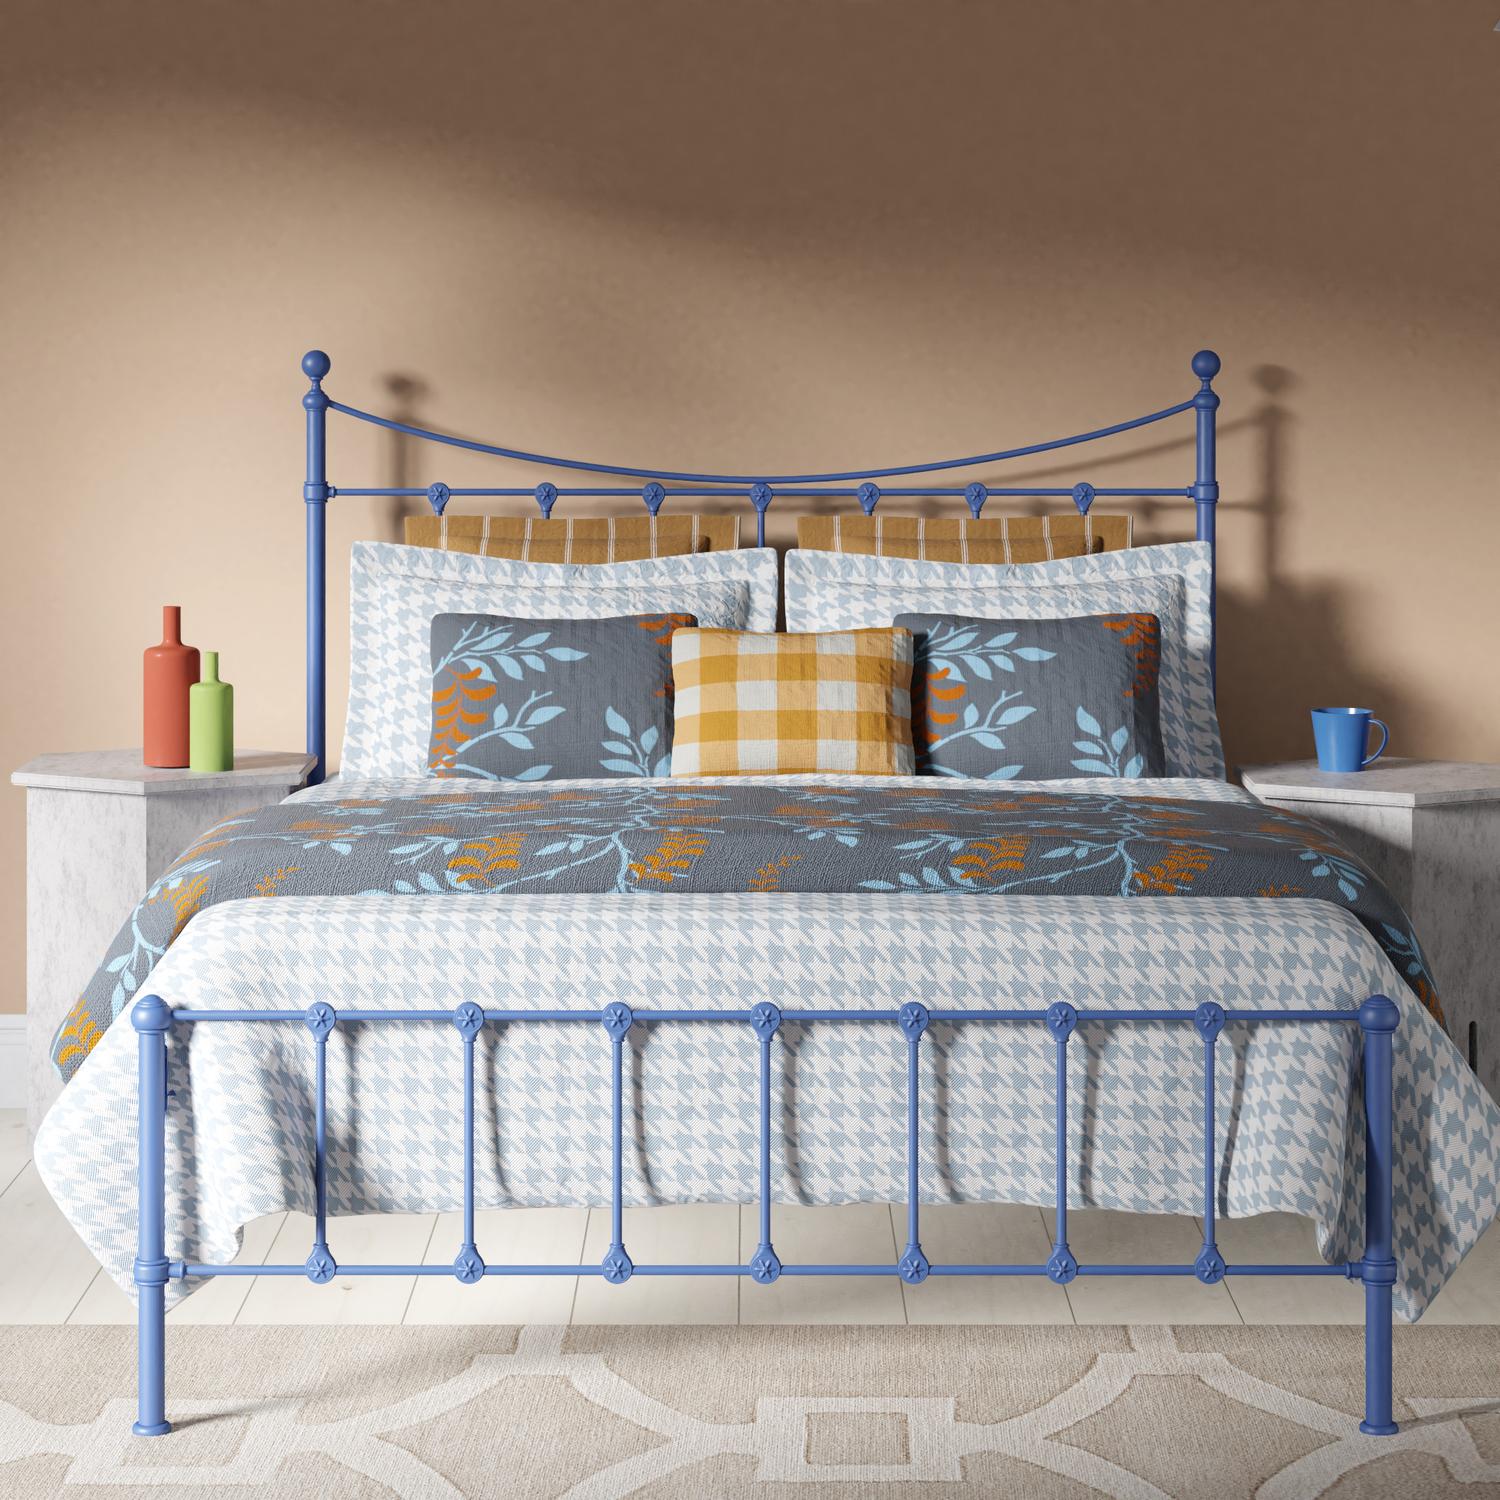 Olivia iron bed - Blue and orange bedroom